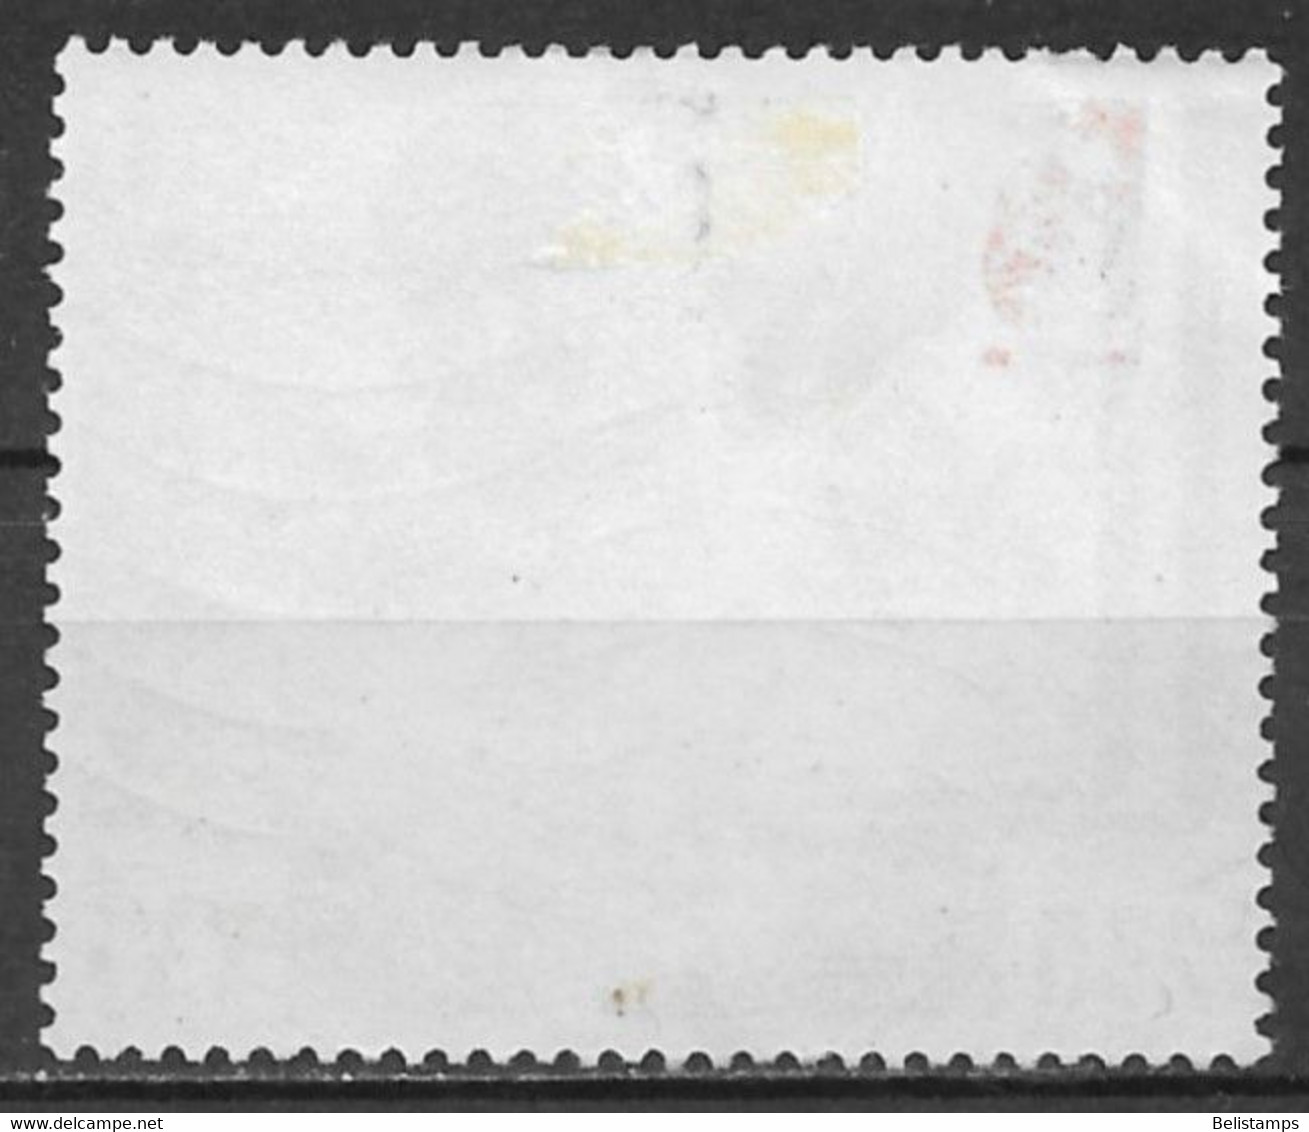 Egypt 1981. Scott #1175 (U) Pres. Anwar Sadat (1917-81) - Used Stamps